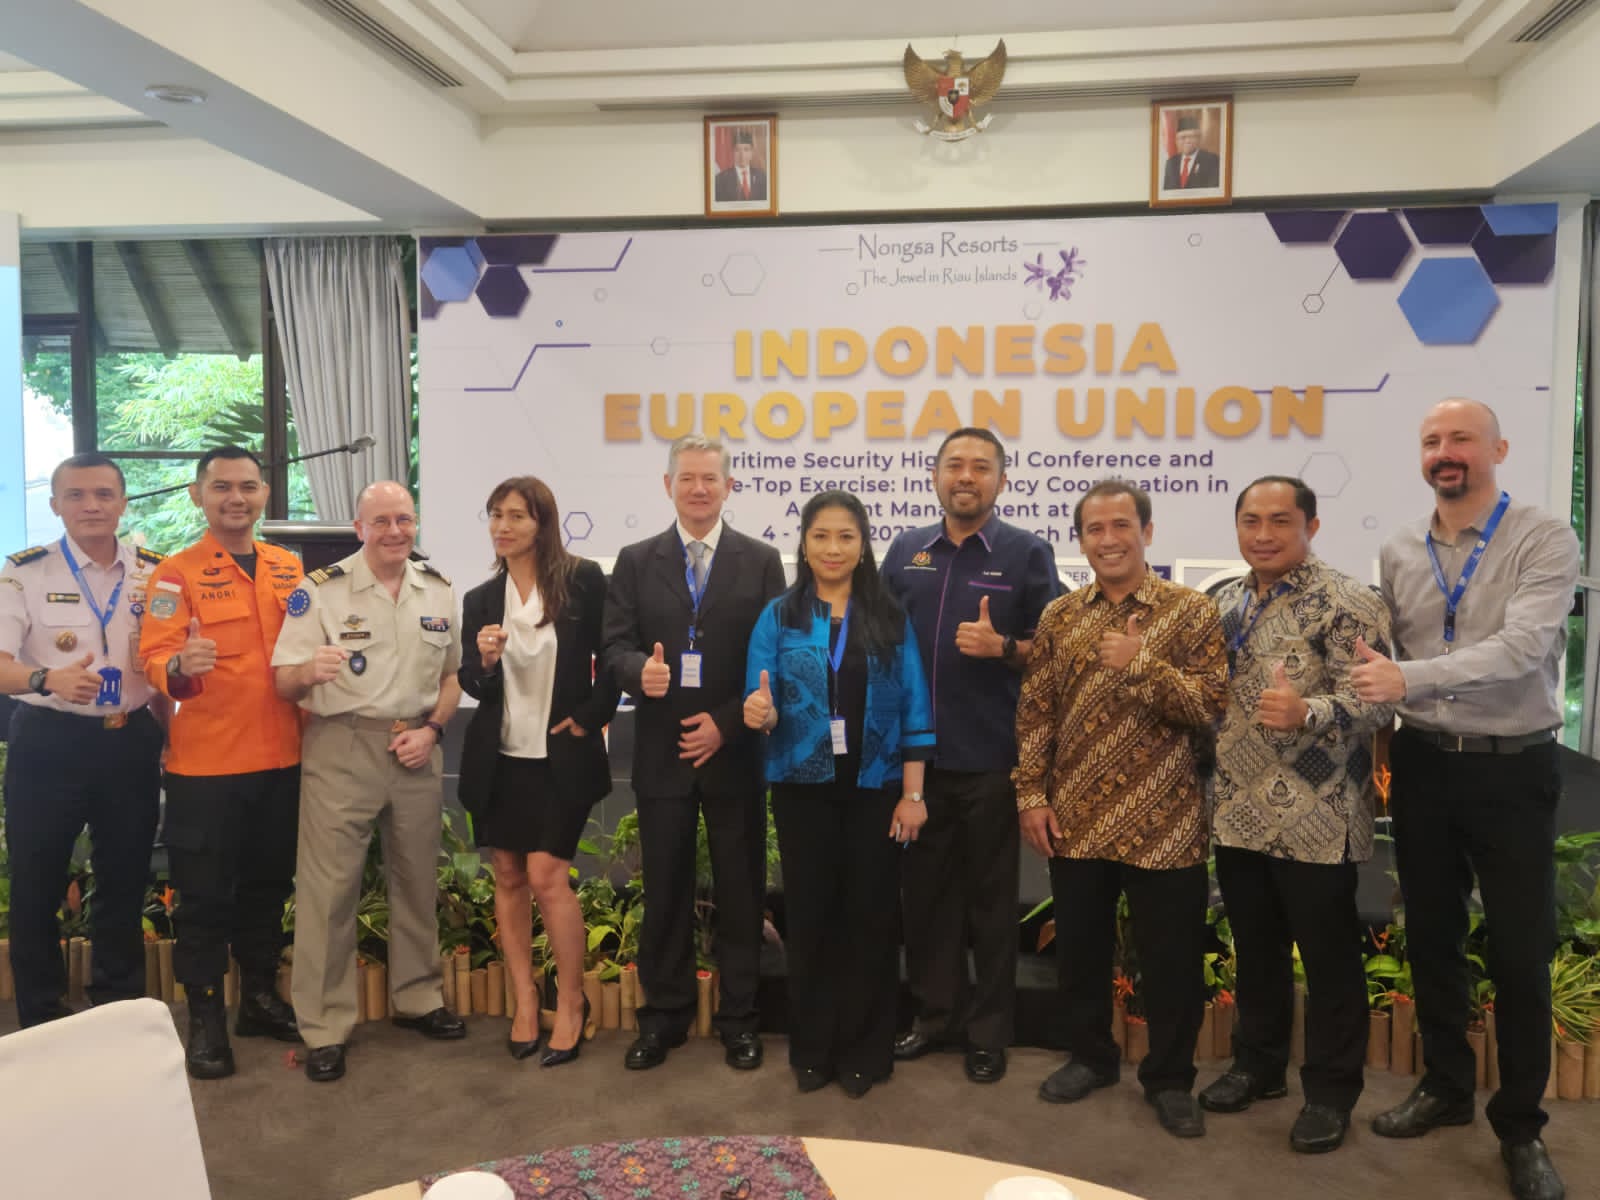 Indonesia - EU maritime conference